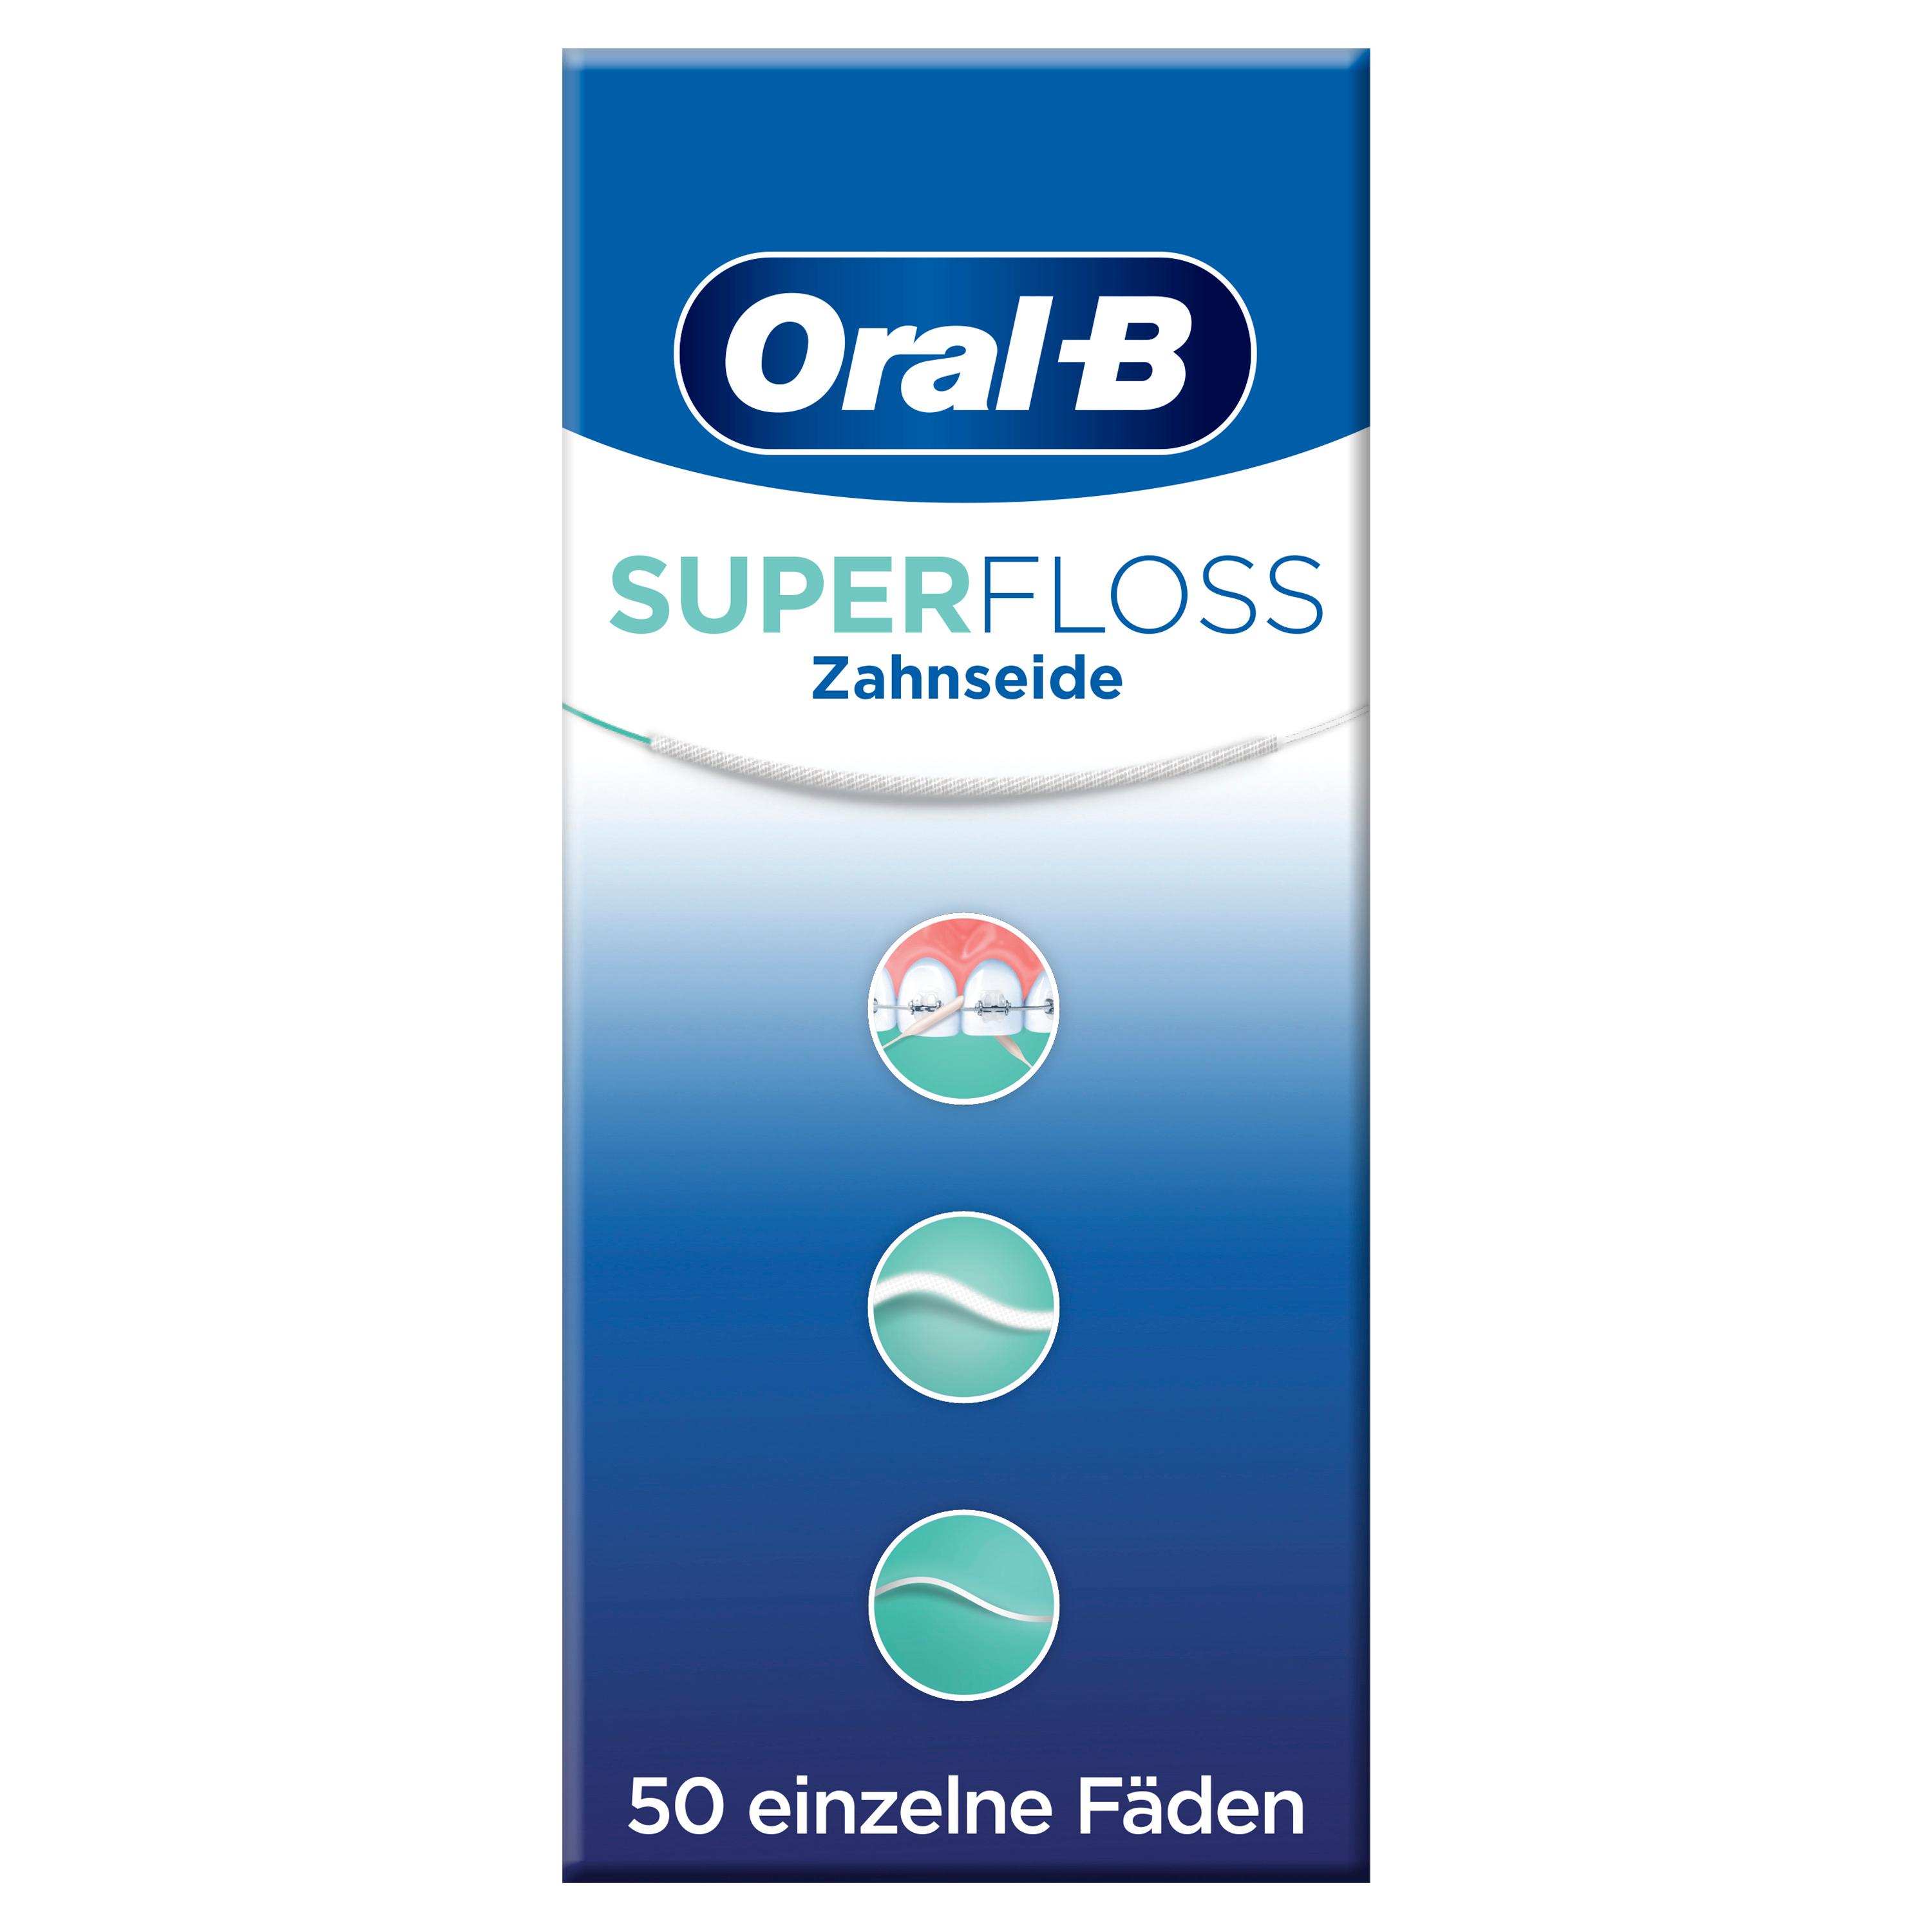 Oral B - Super Floss 50 Fäden